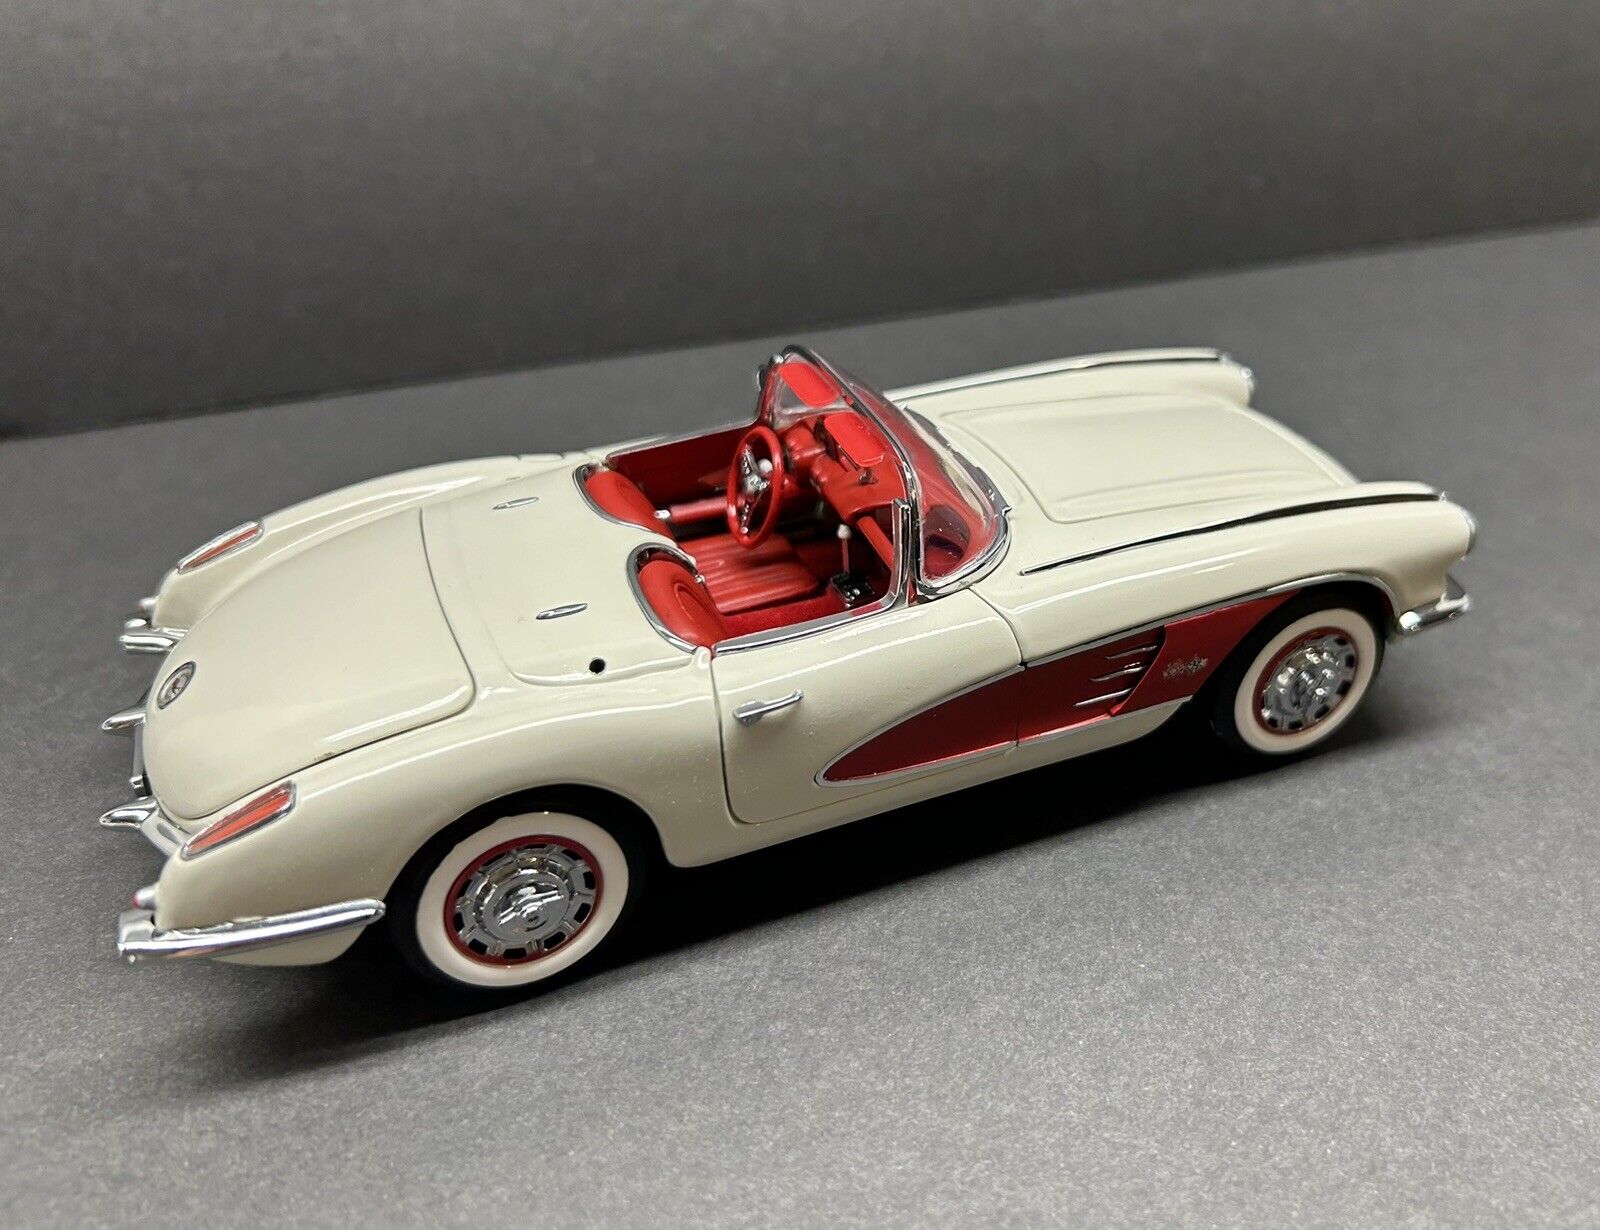 RARE Franklin Mint 1960 corvette limited edition diecast 50th Anniversary